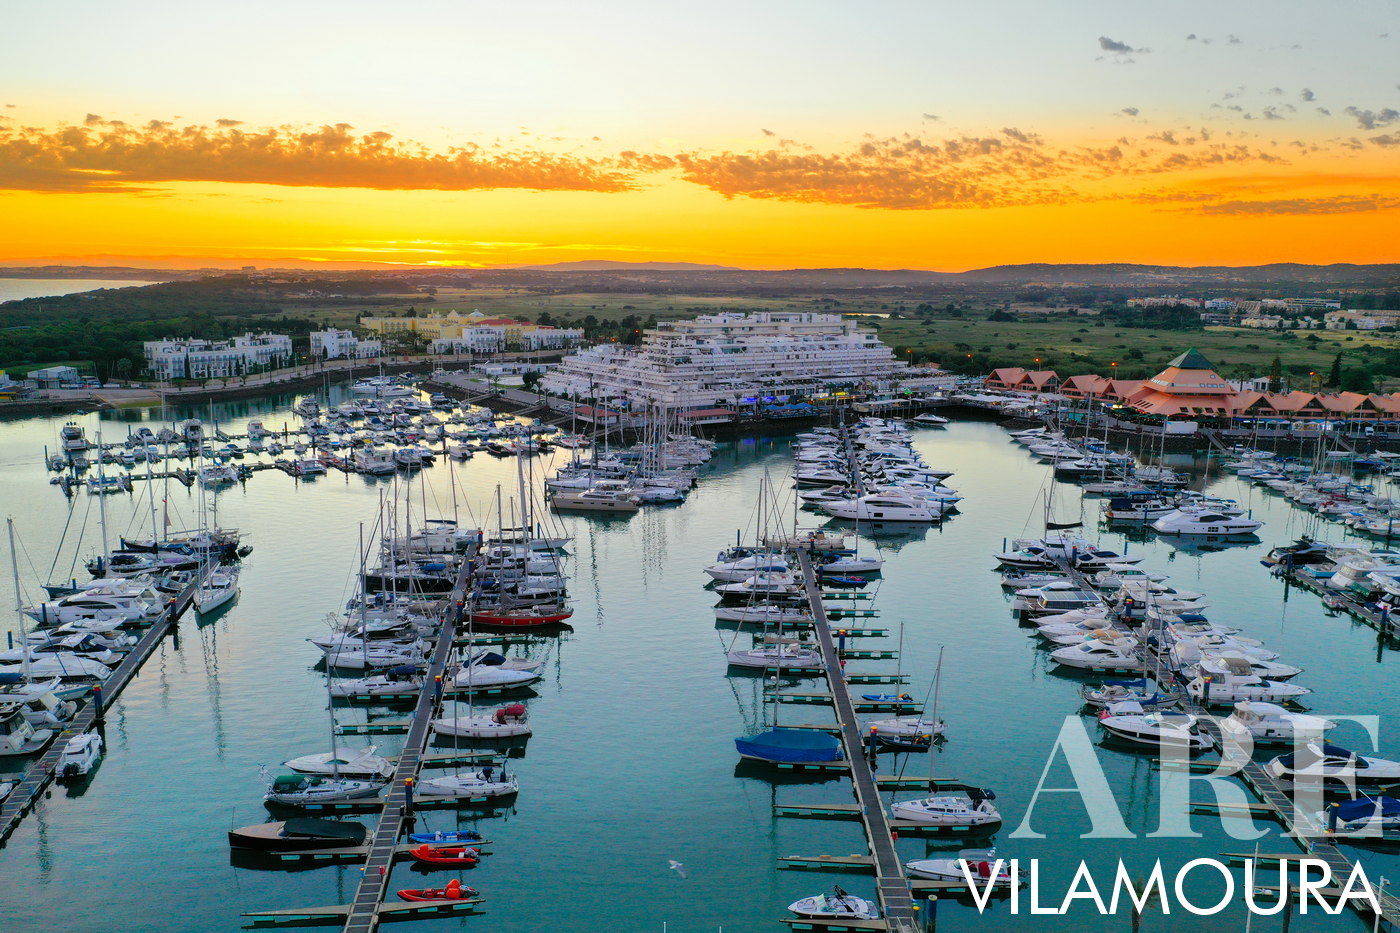 Vilamoura Marina • A Premier Nautical Destination with World-Class Facilities and 825 Berths